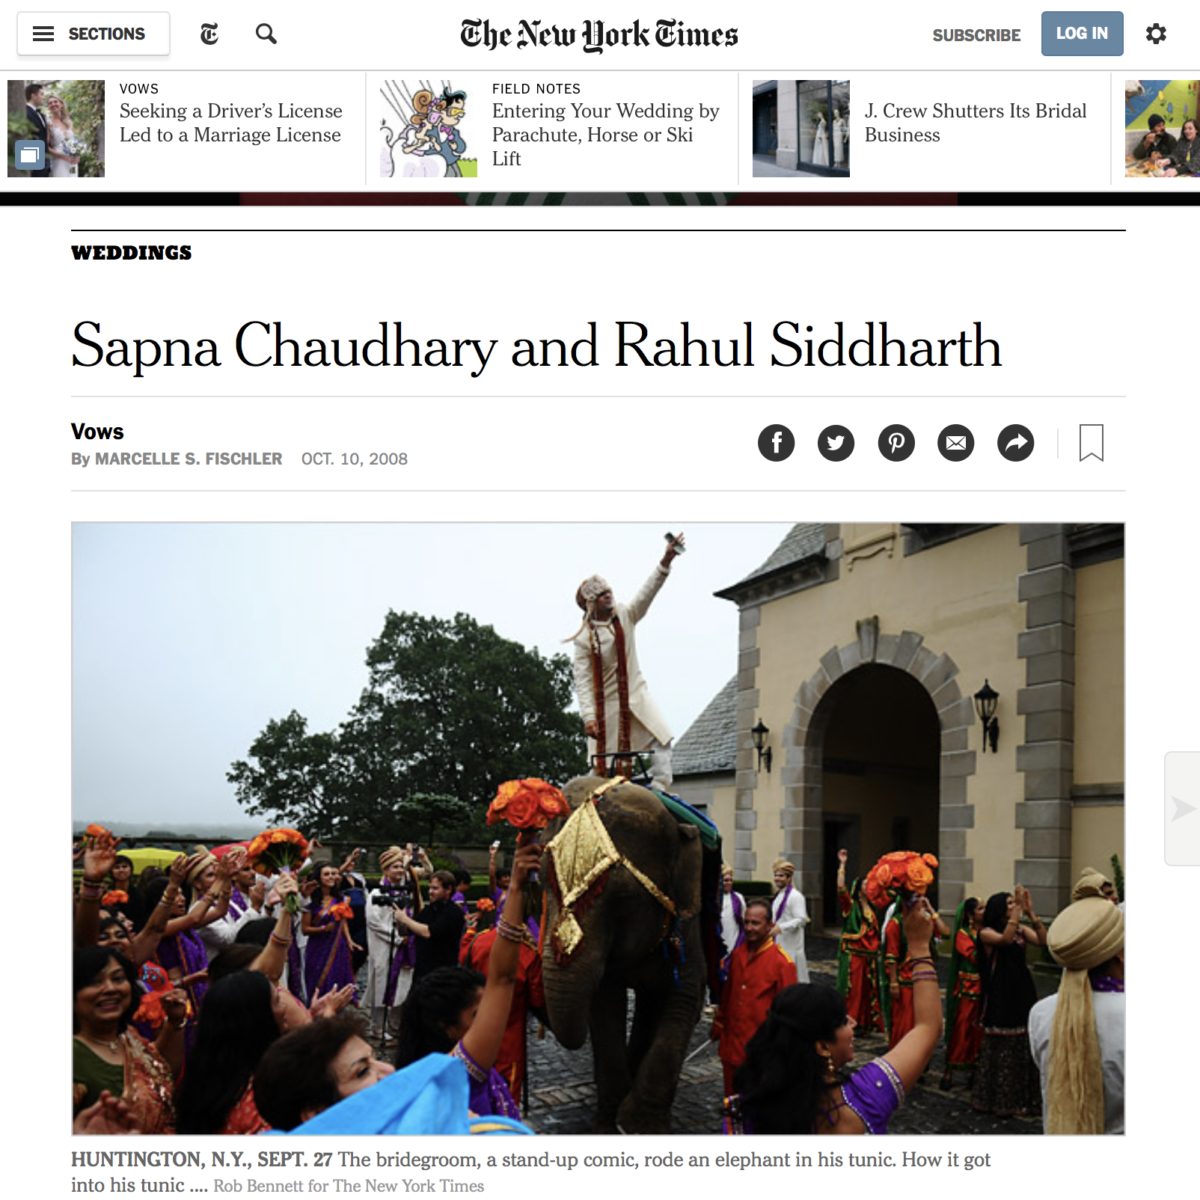 The New York Times Sapna Chaudhary and Rahul Siddharth's Wedding